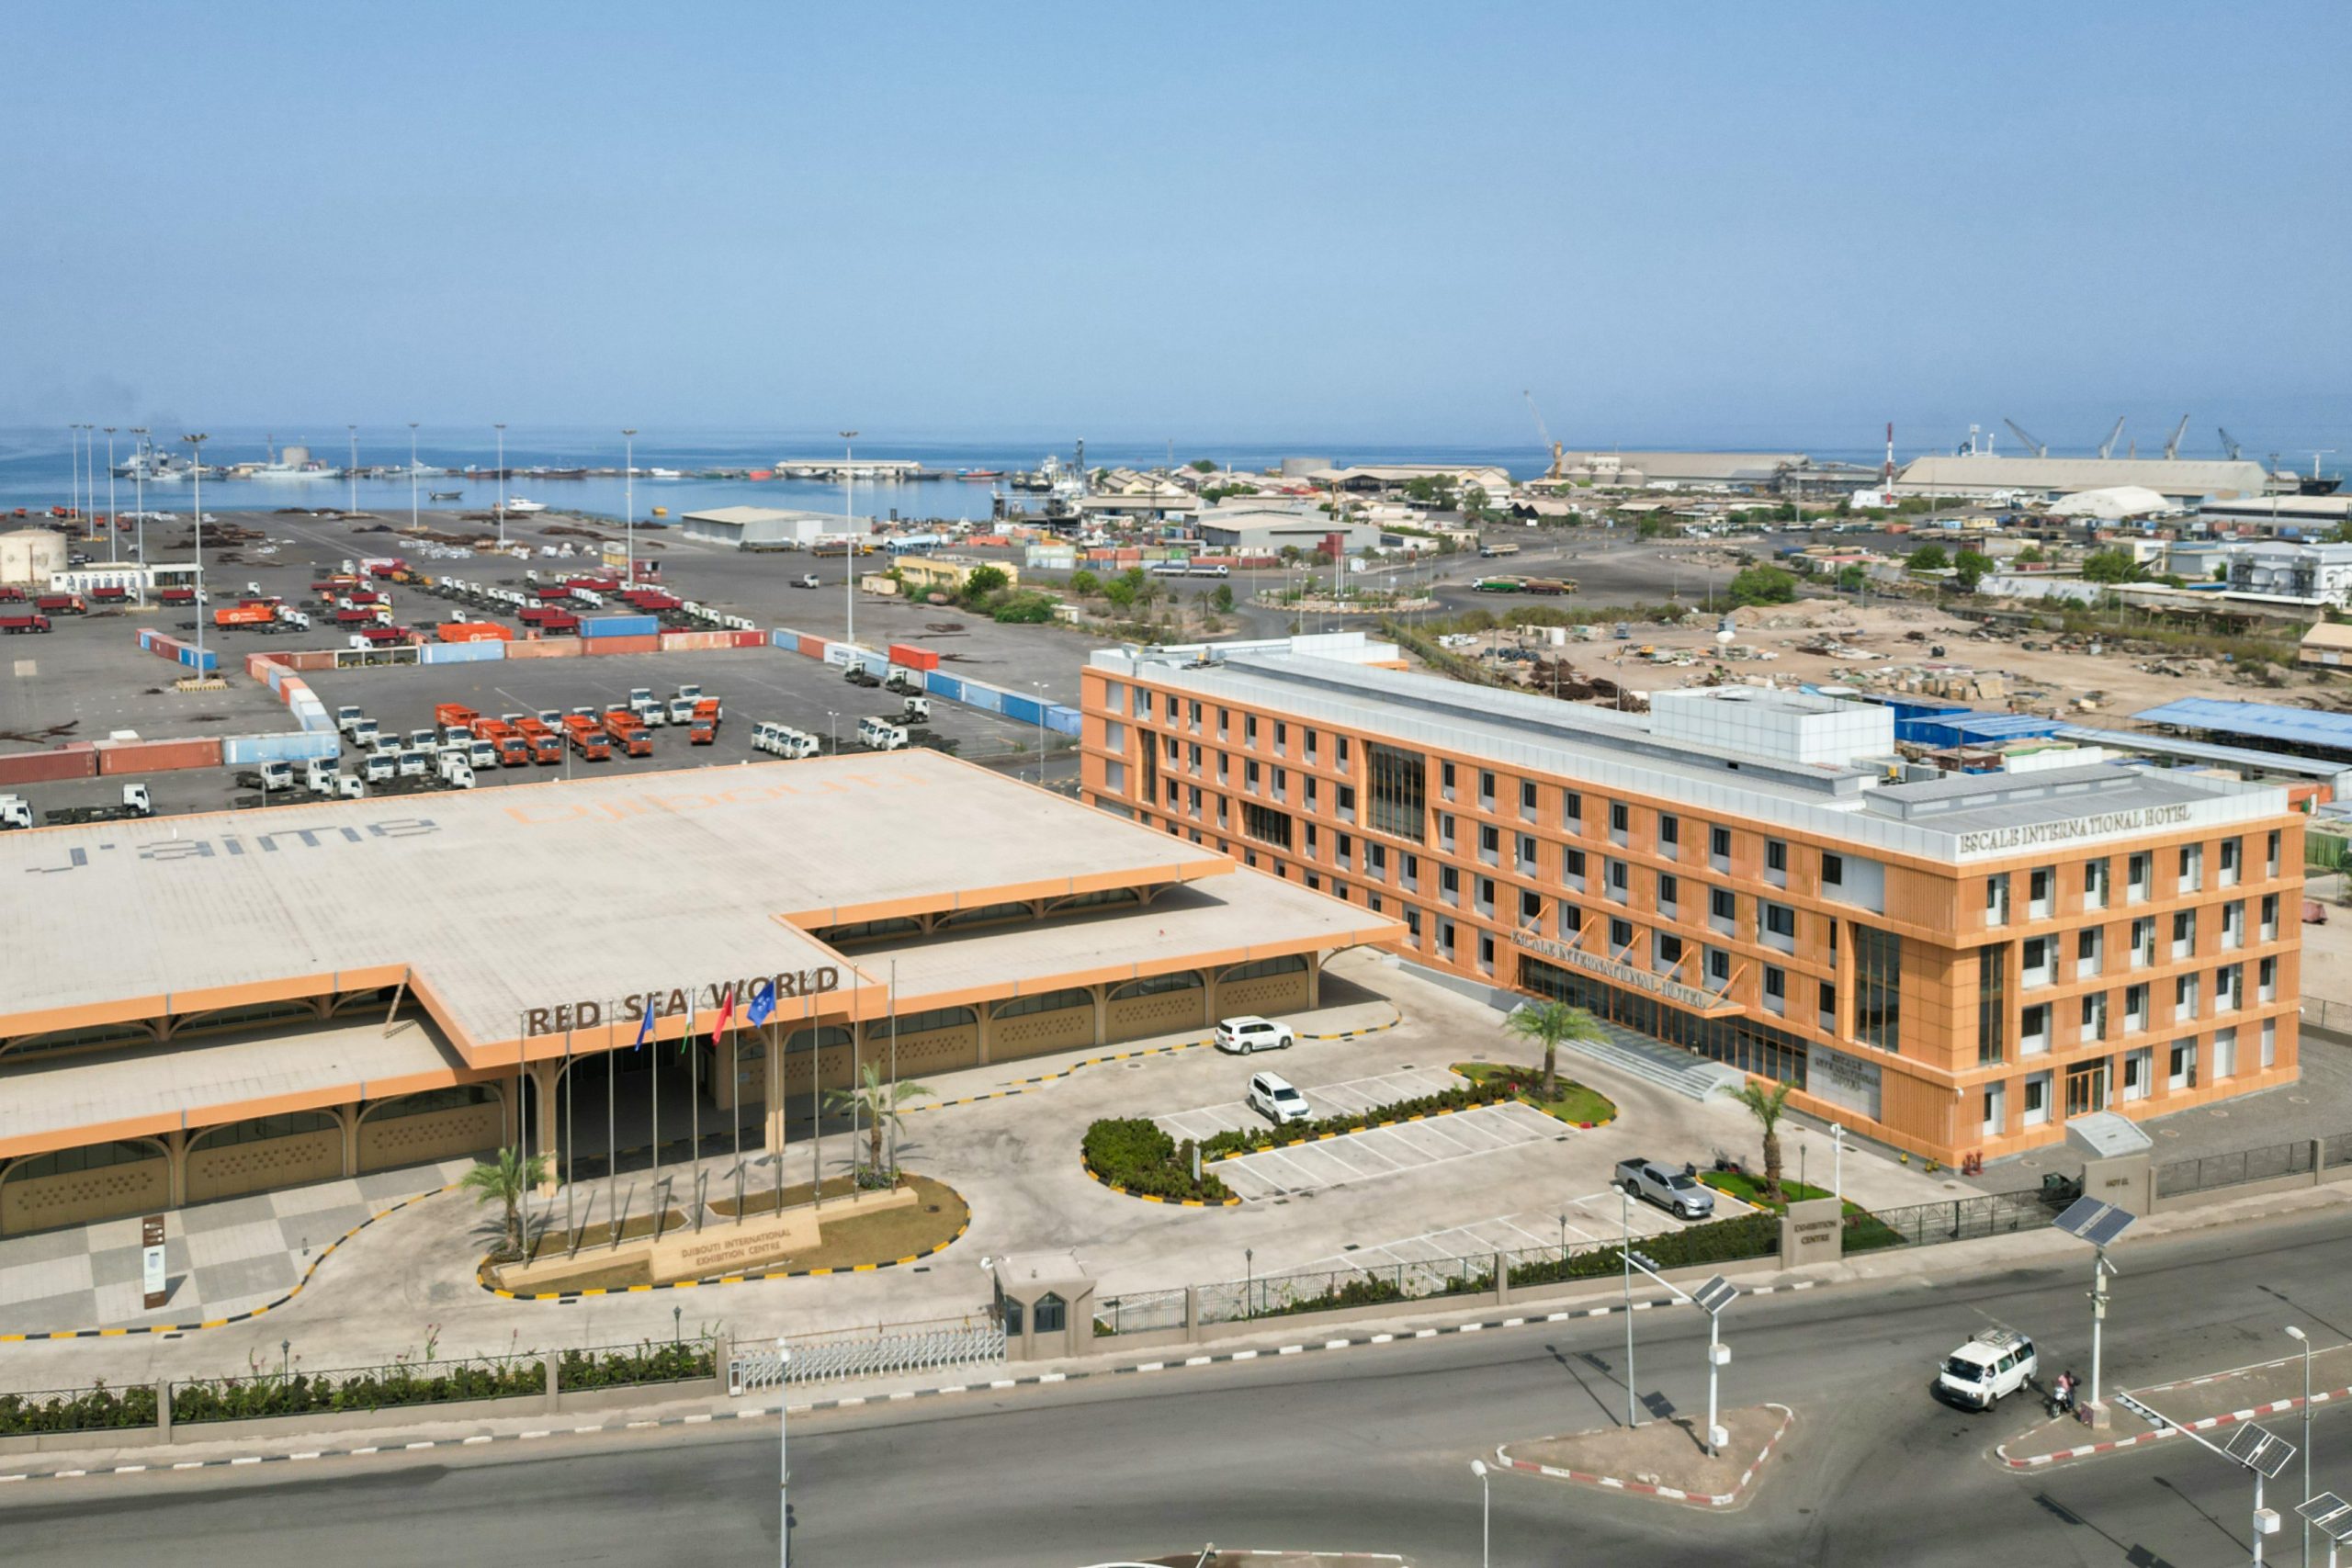 modular Djibouti hotol overall appearance